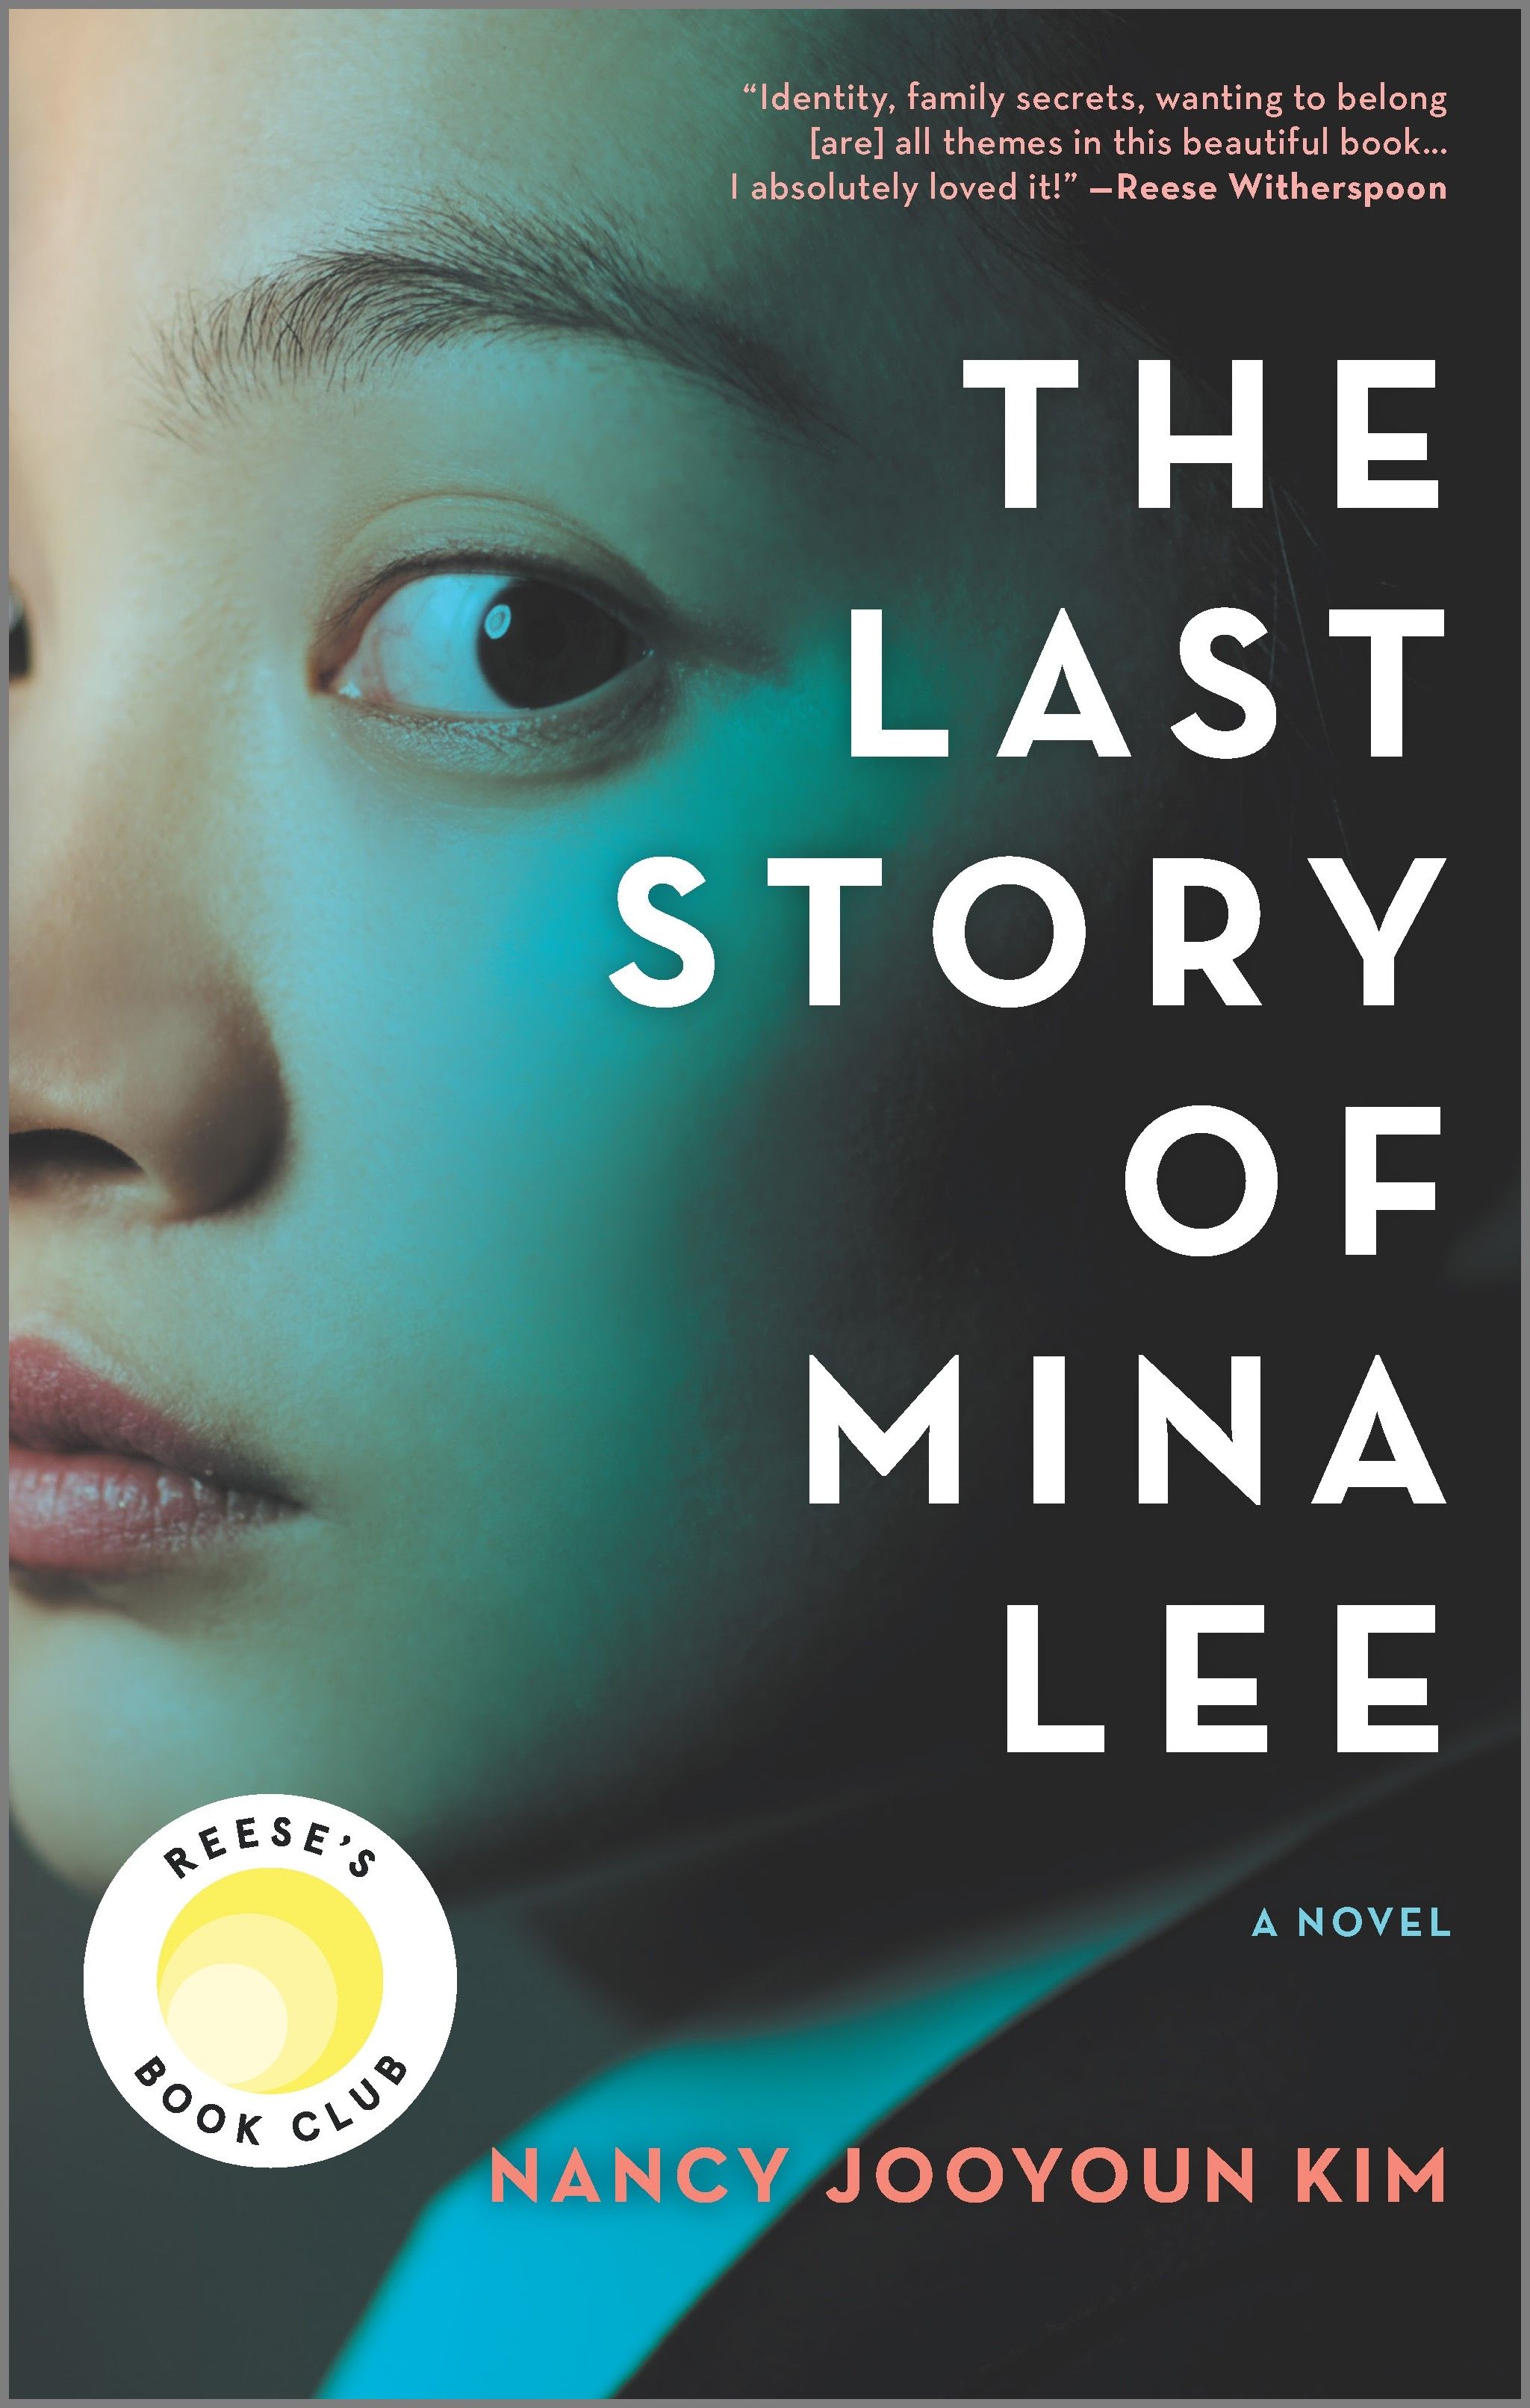 The Last Story of Mina Lee by Nancy Jooyoun Kin